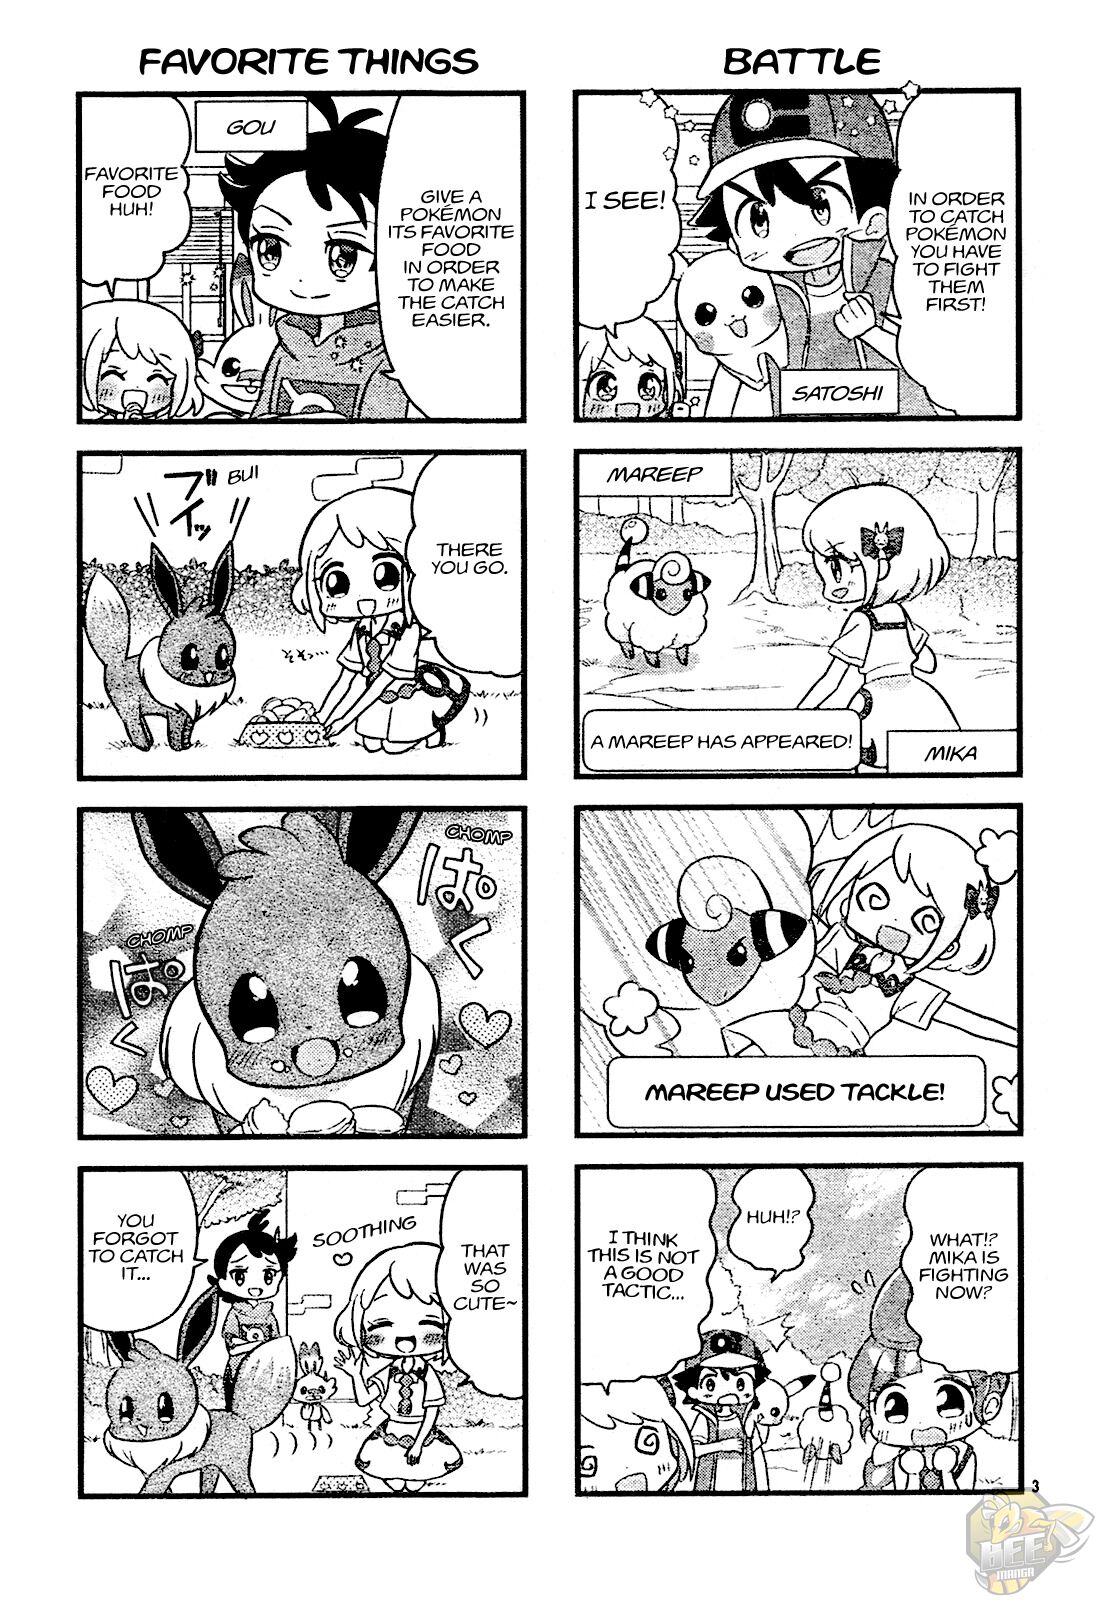 We Love ♡ Pocket Monsters Chapter 2 - HolyManga.net